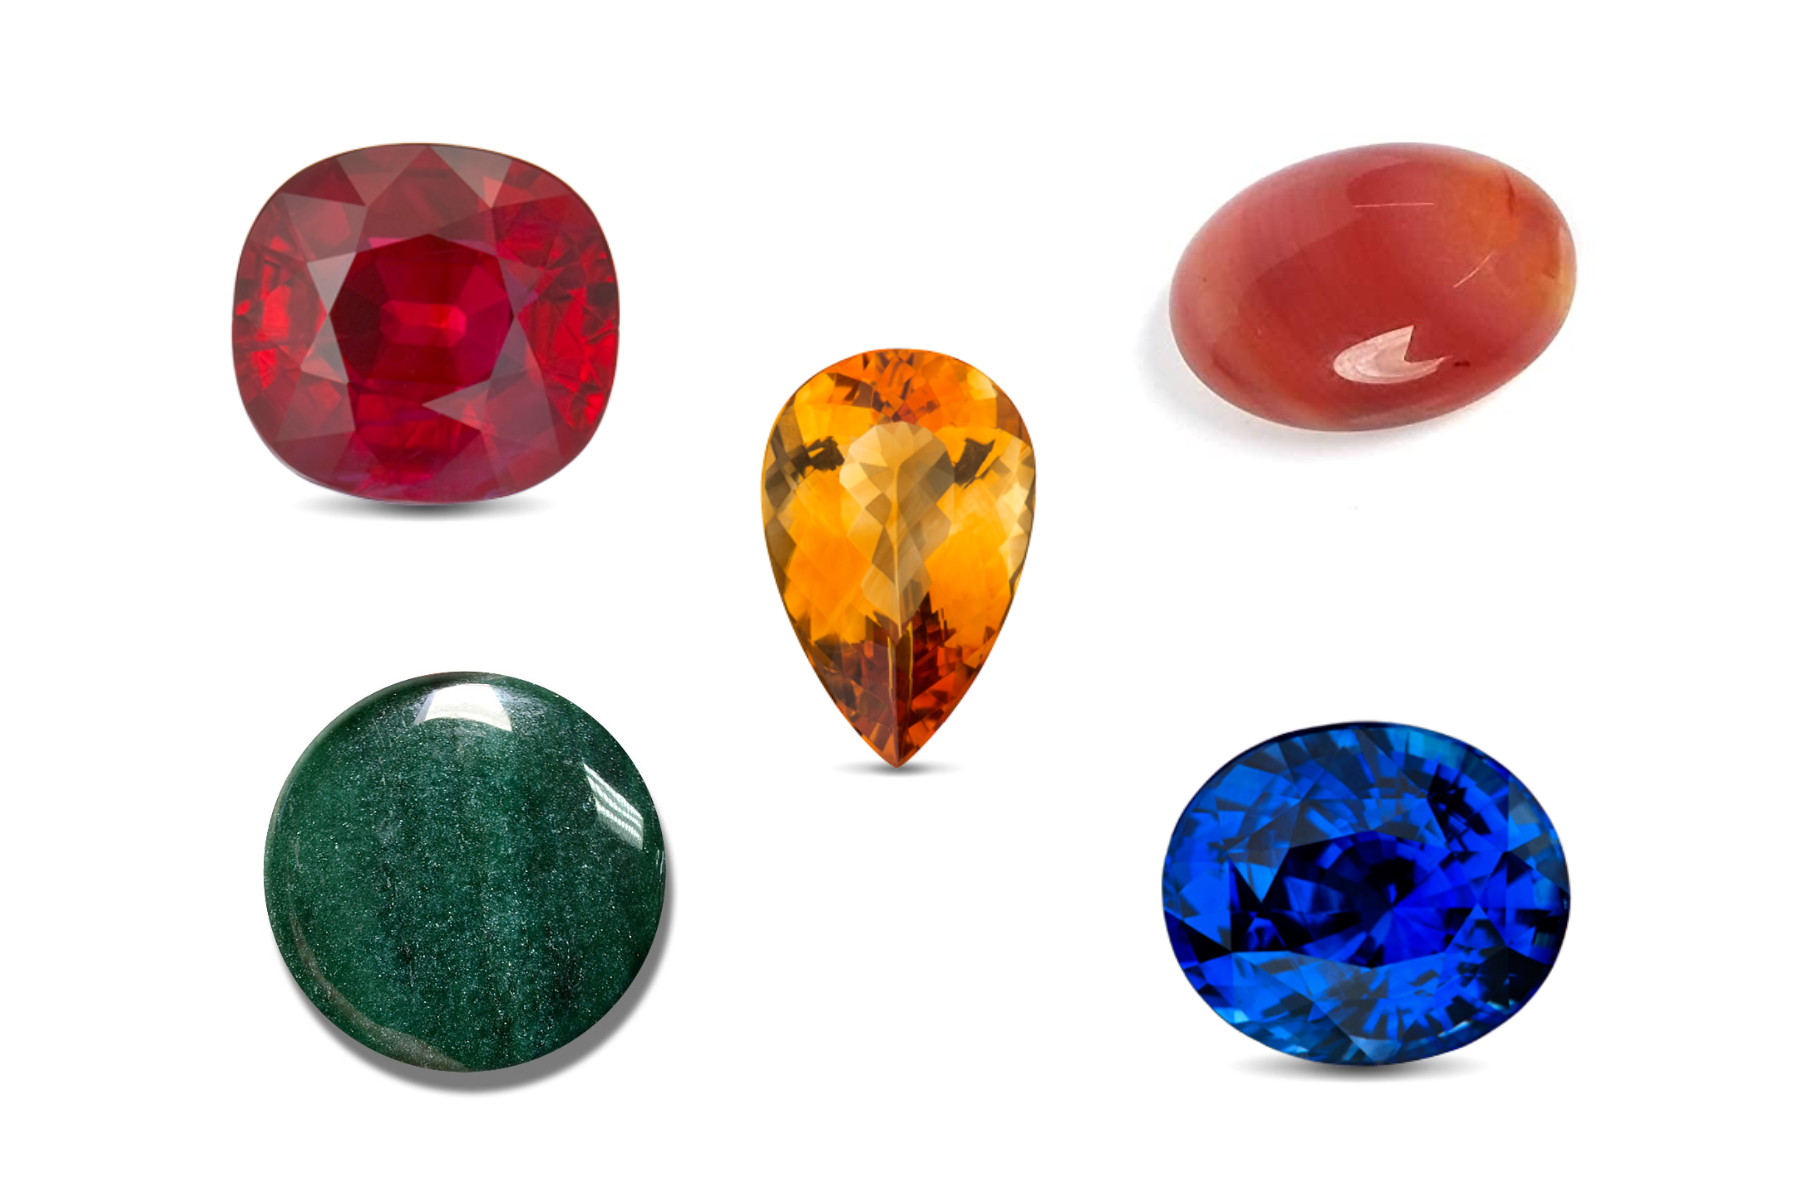 The Ruby, Citrine, Carnelian, Aventurine, and Sapphire gemstones